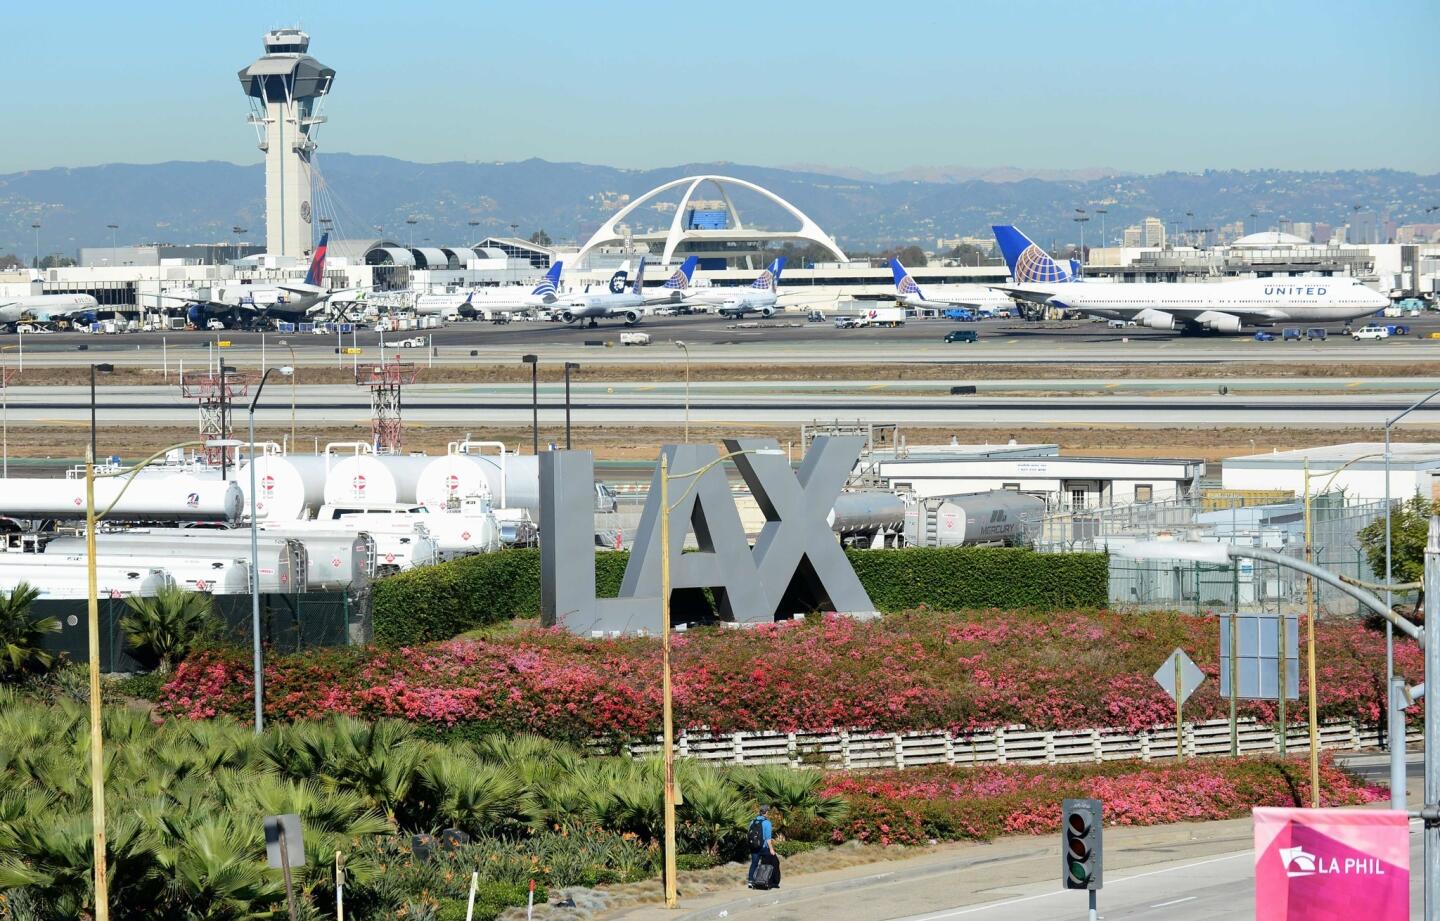 3. Los Angeles International Airport